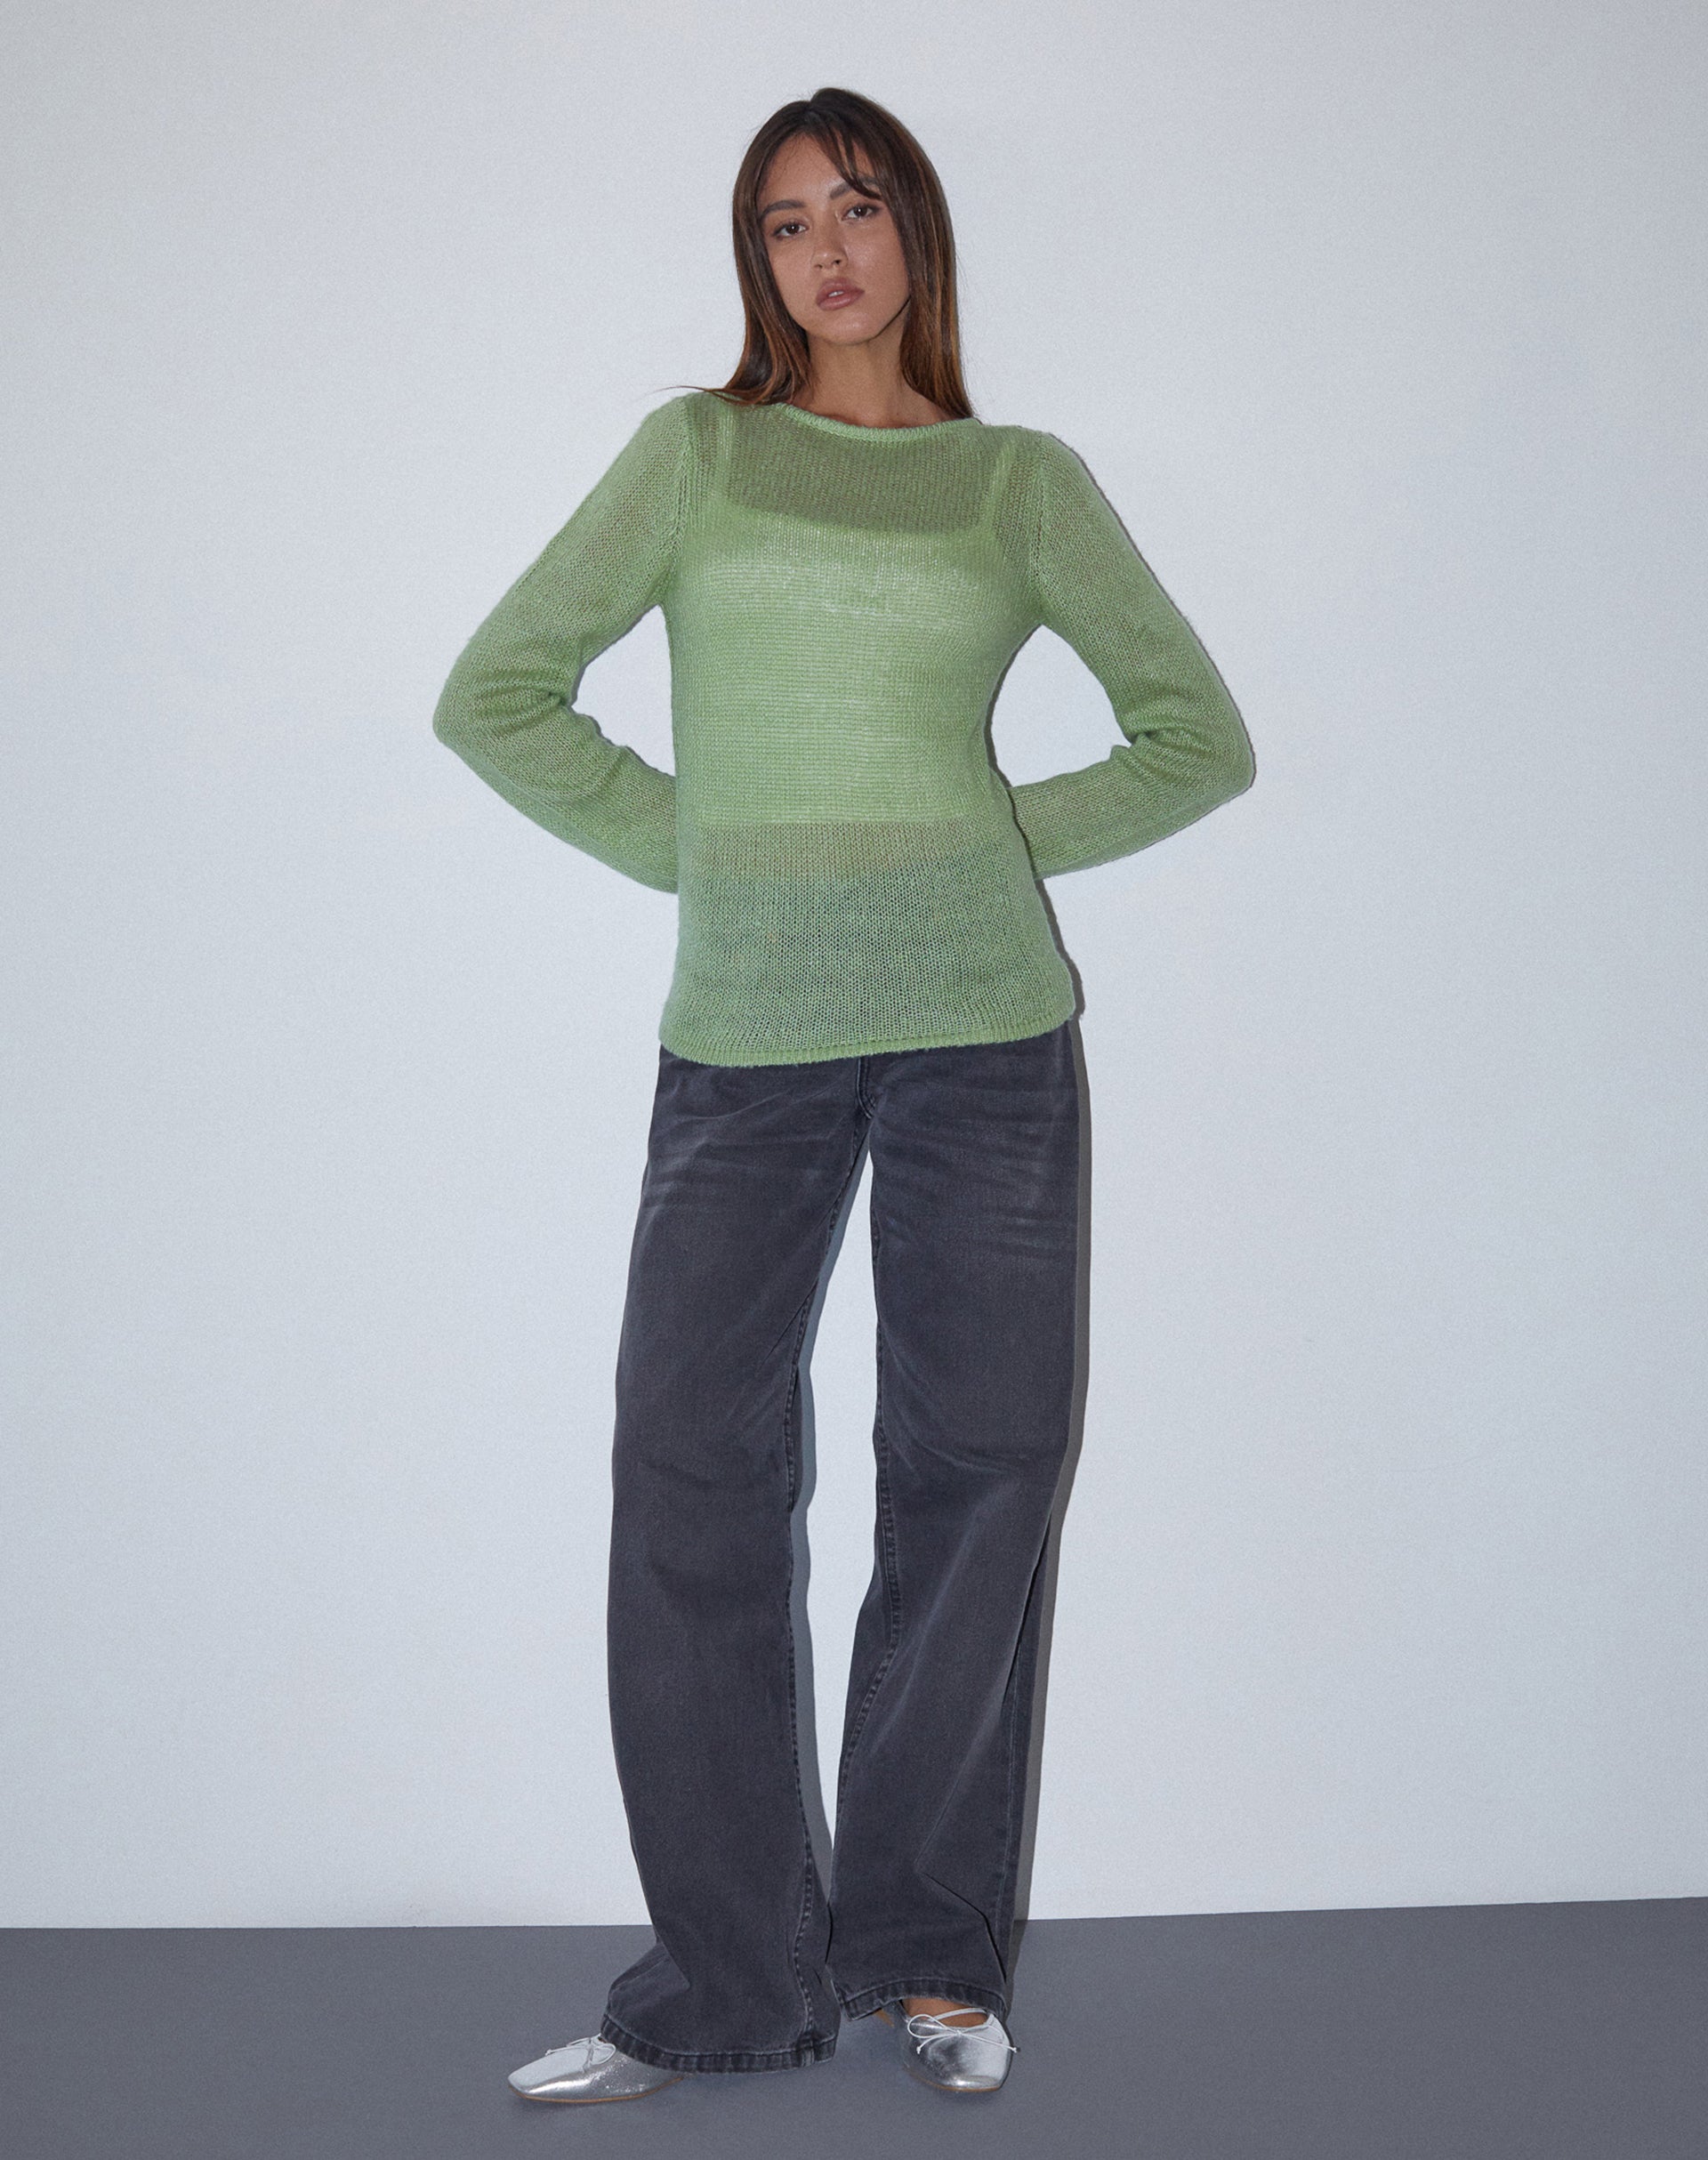 Image of Sukana Long Sleeve Sheer-Knit Top in Light Green